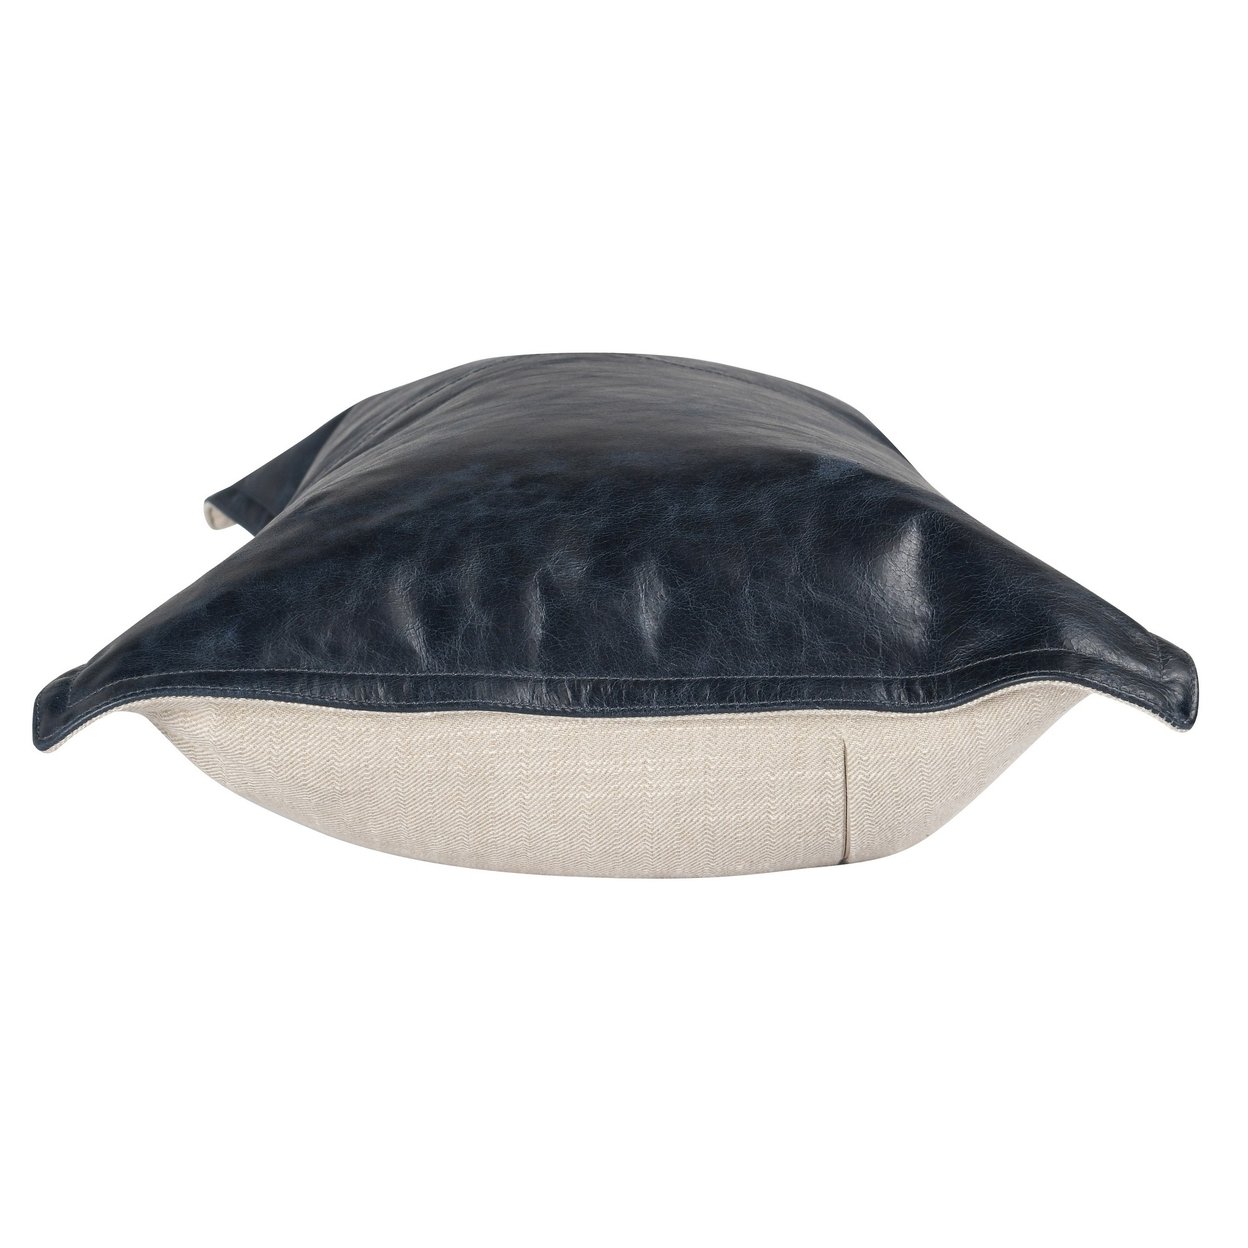 Norm 14 X 26 Lumbar Accent Throw Pillow, 4 Pieced Design, Soft Blue Leather- Saltoro Sherpi